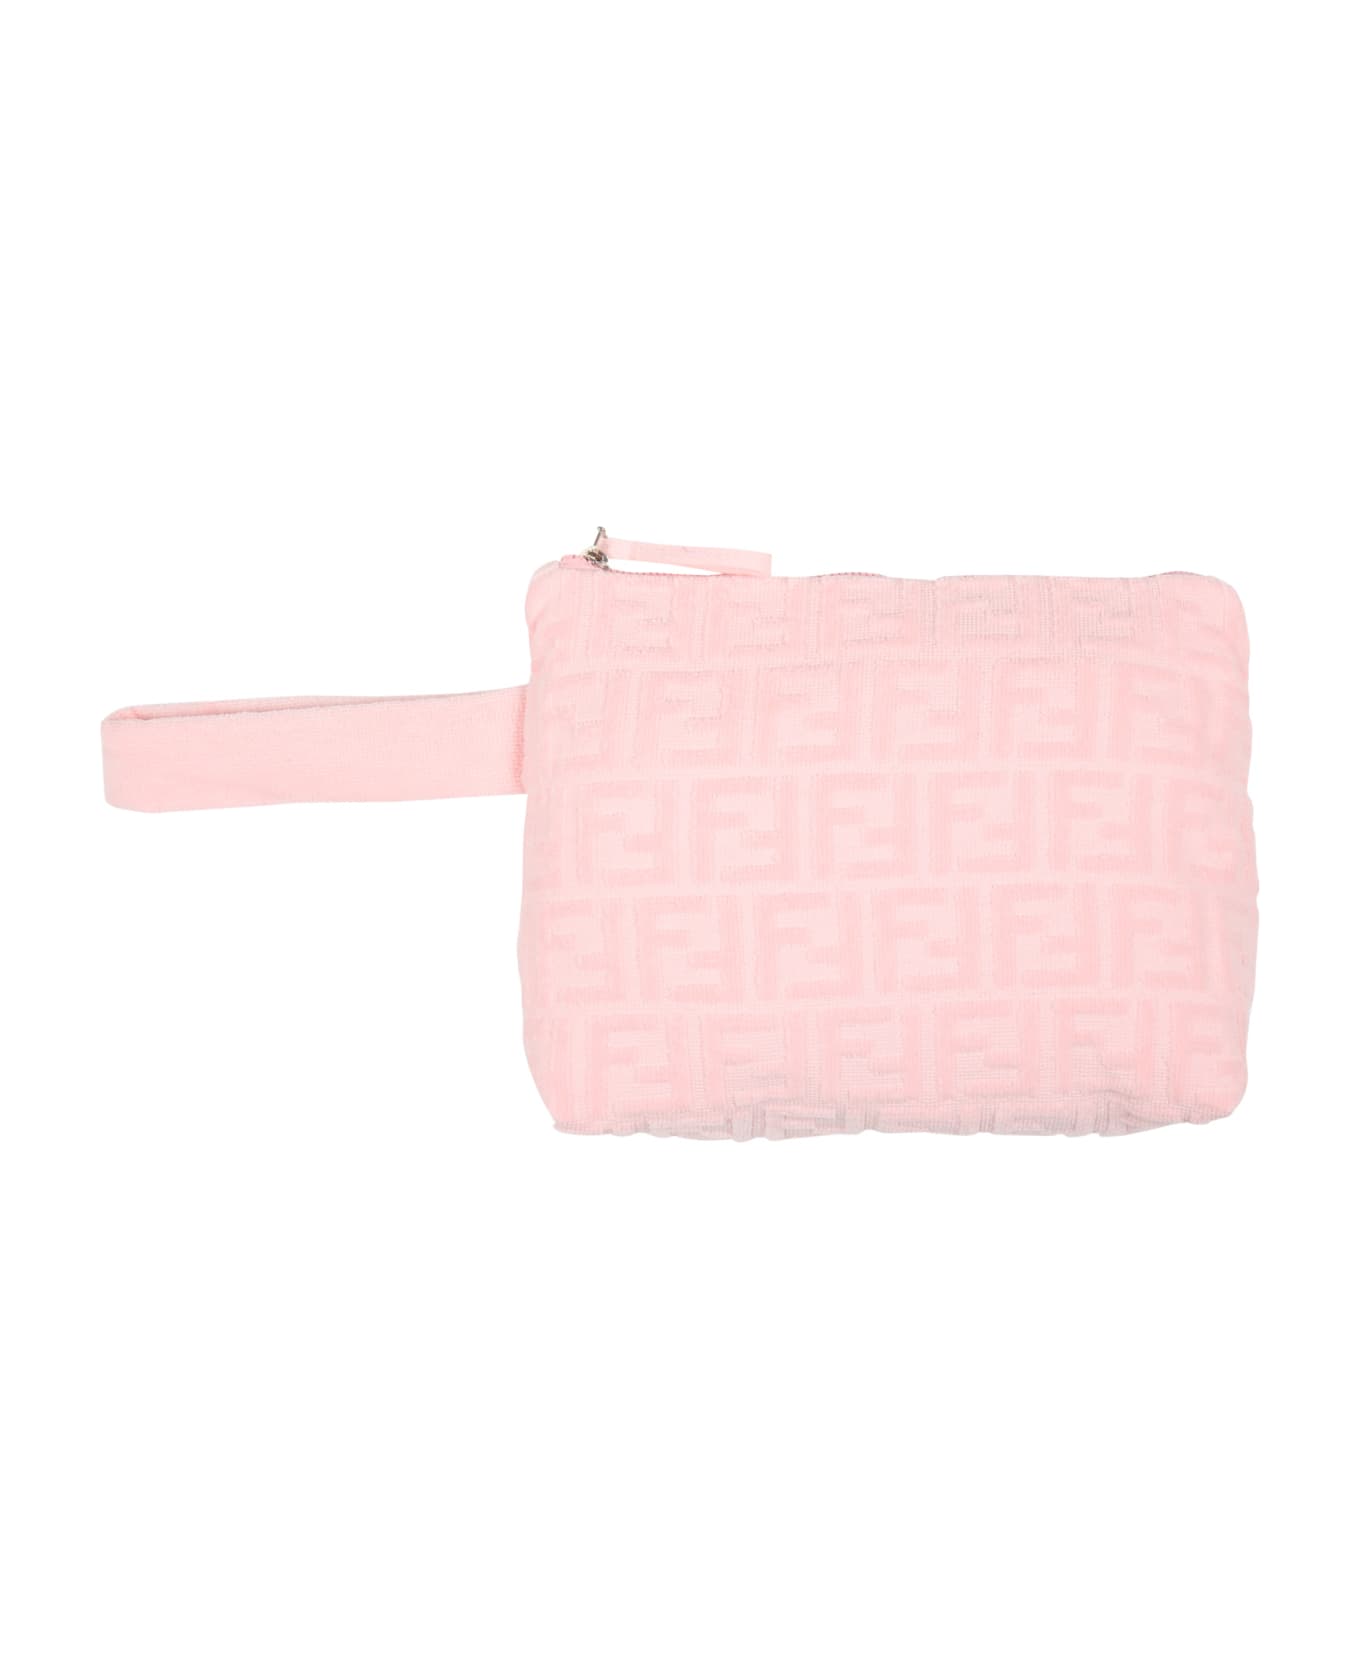 Fendi Pink Clutch Bag For Girl - Pink